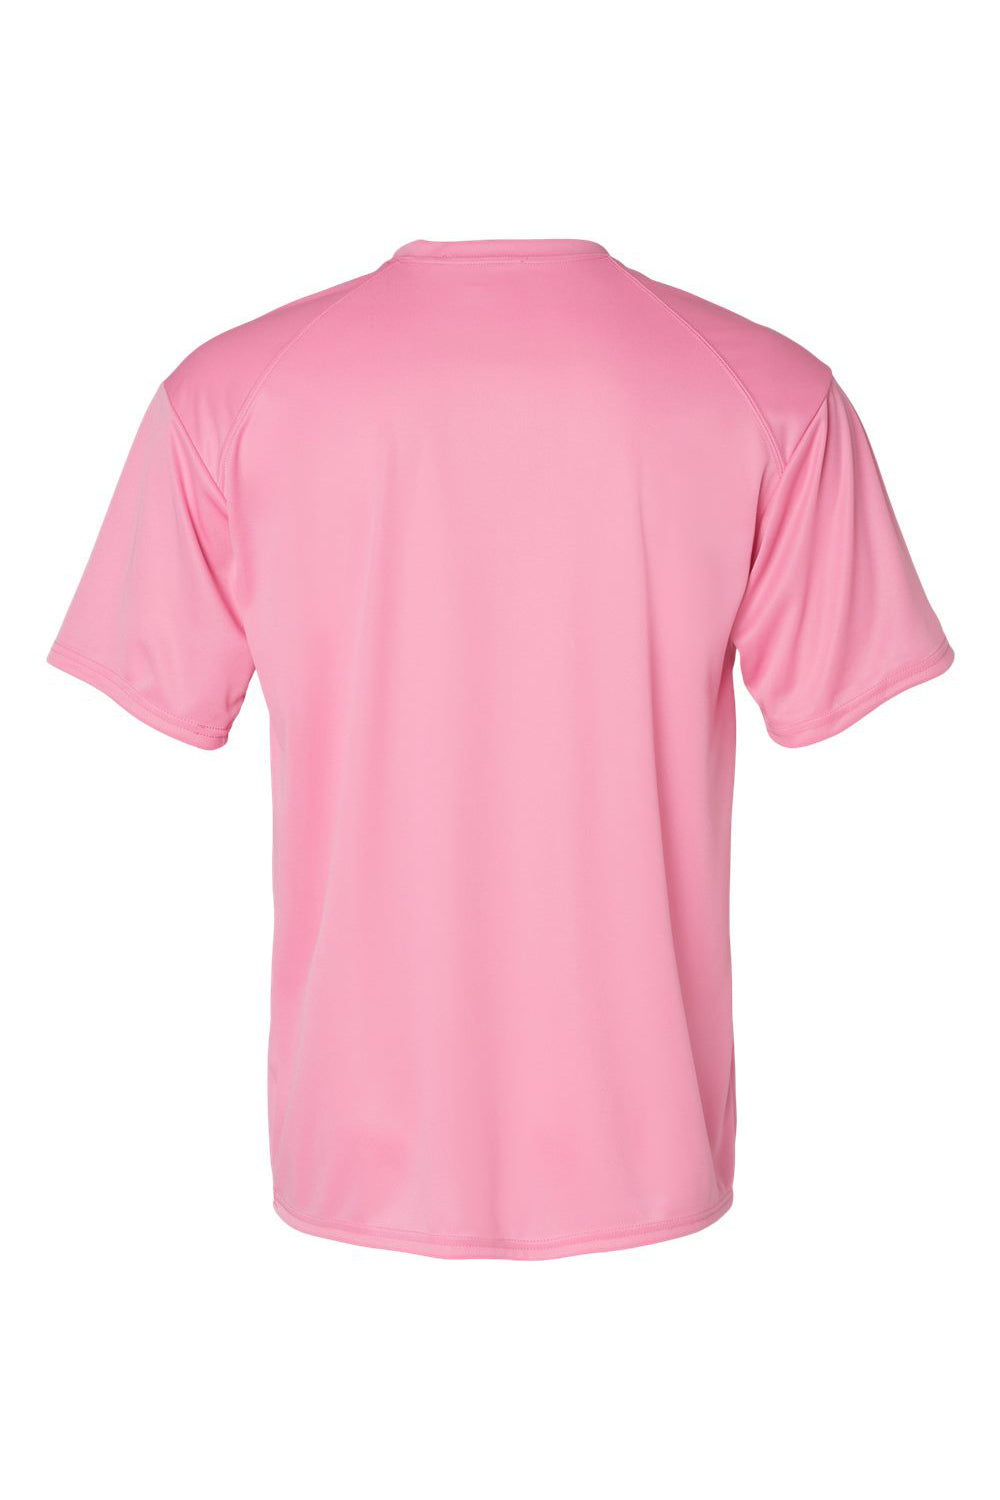 Badger 4120 Mens B-Core Moisture Wicking Short Sleeve Crewneck T-Shirt Pink Flat Back